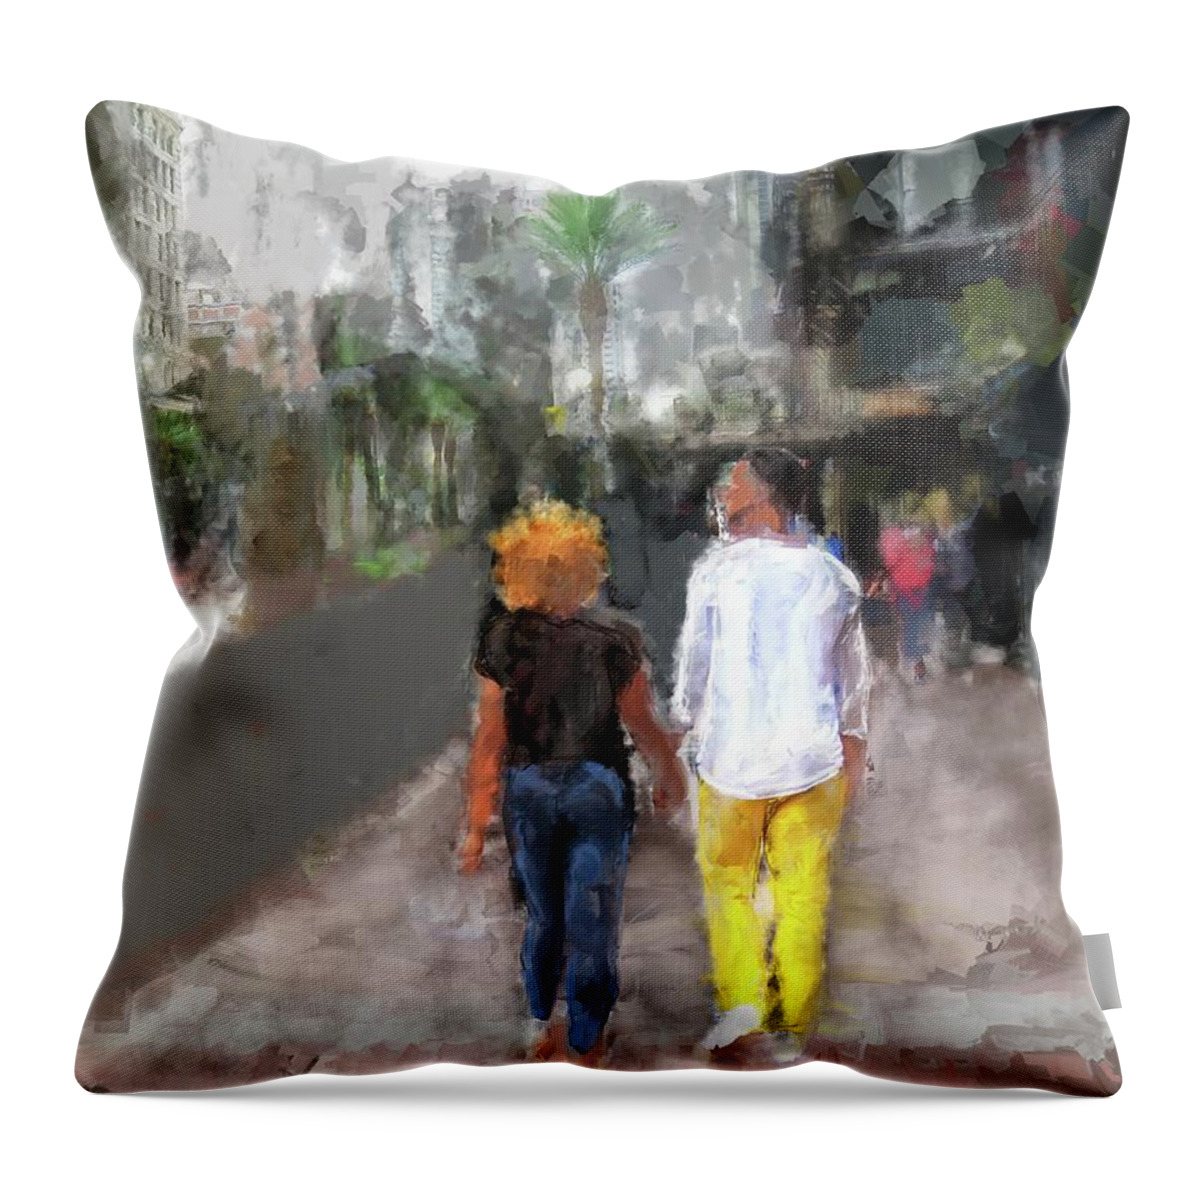 Romantic Couple Throw Pillow featuring the digital art Romantic Couple by Eduardo Tavares